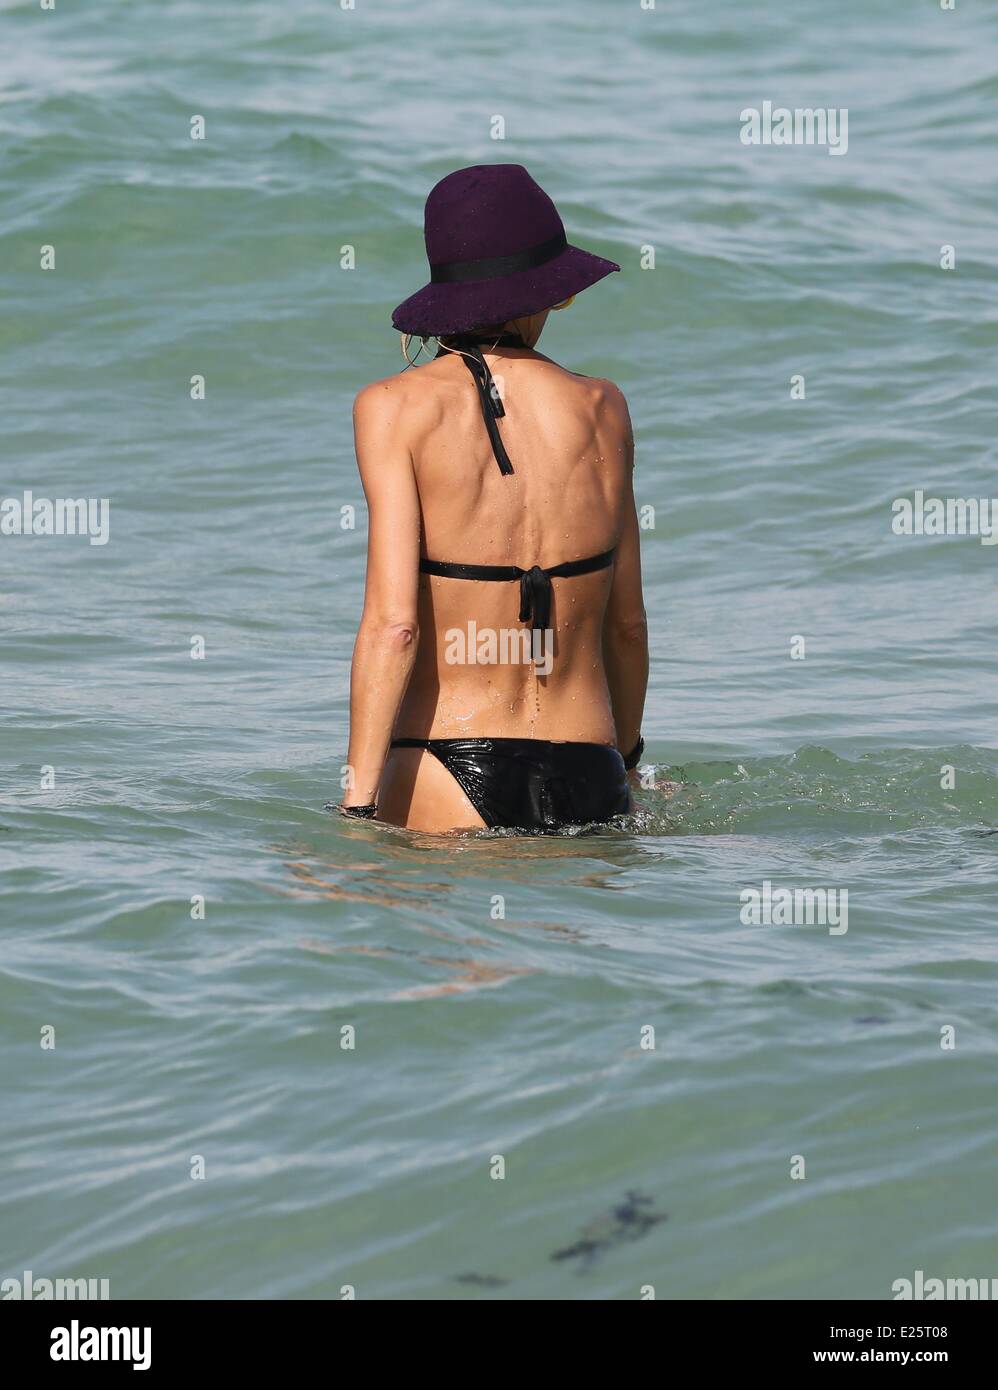 Australian model Sharni Vinson, wearing a black bikini, goes for a swim in  Miami beach Featuring: Sharni Vinson Where: Miami Beach, Florida, United  States When: 16 Aug 2013 Stock Photo - Alamy